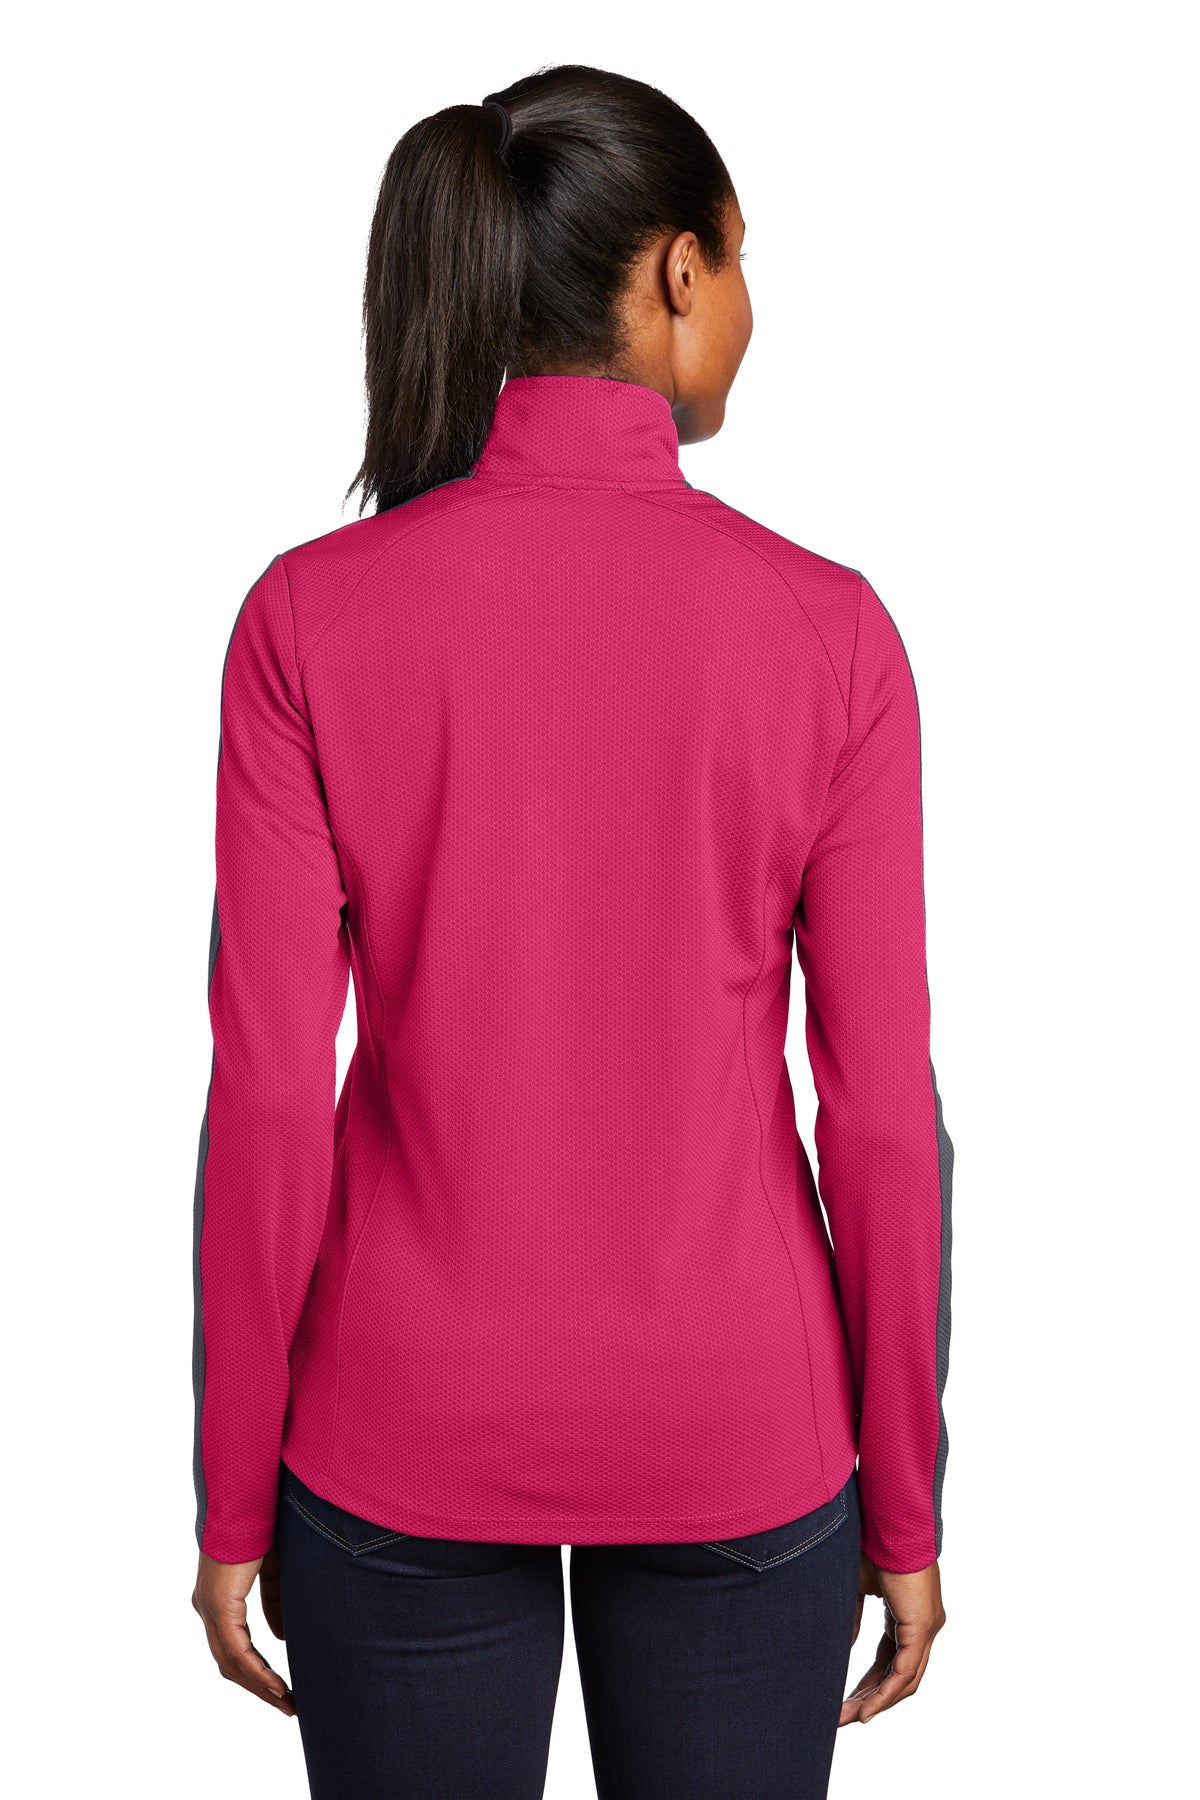 sport-tek_lst861 _pink raspberry/ iron grey_company_logo_sweatshirts